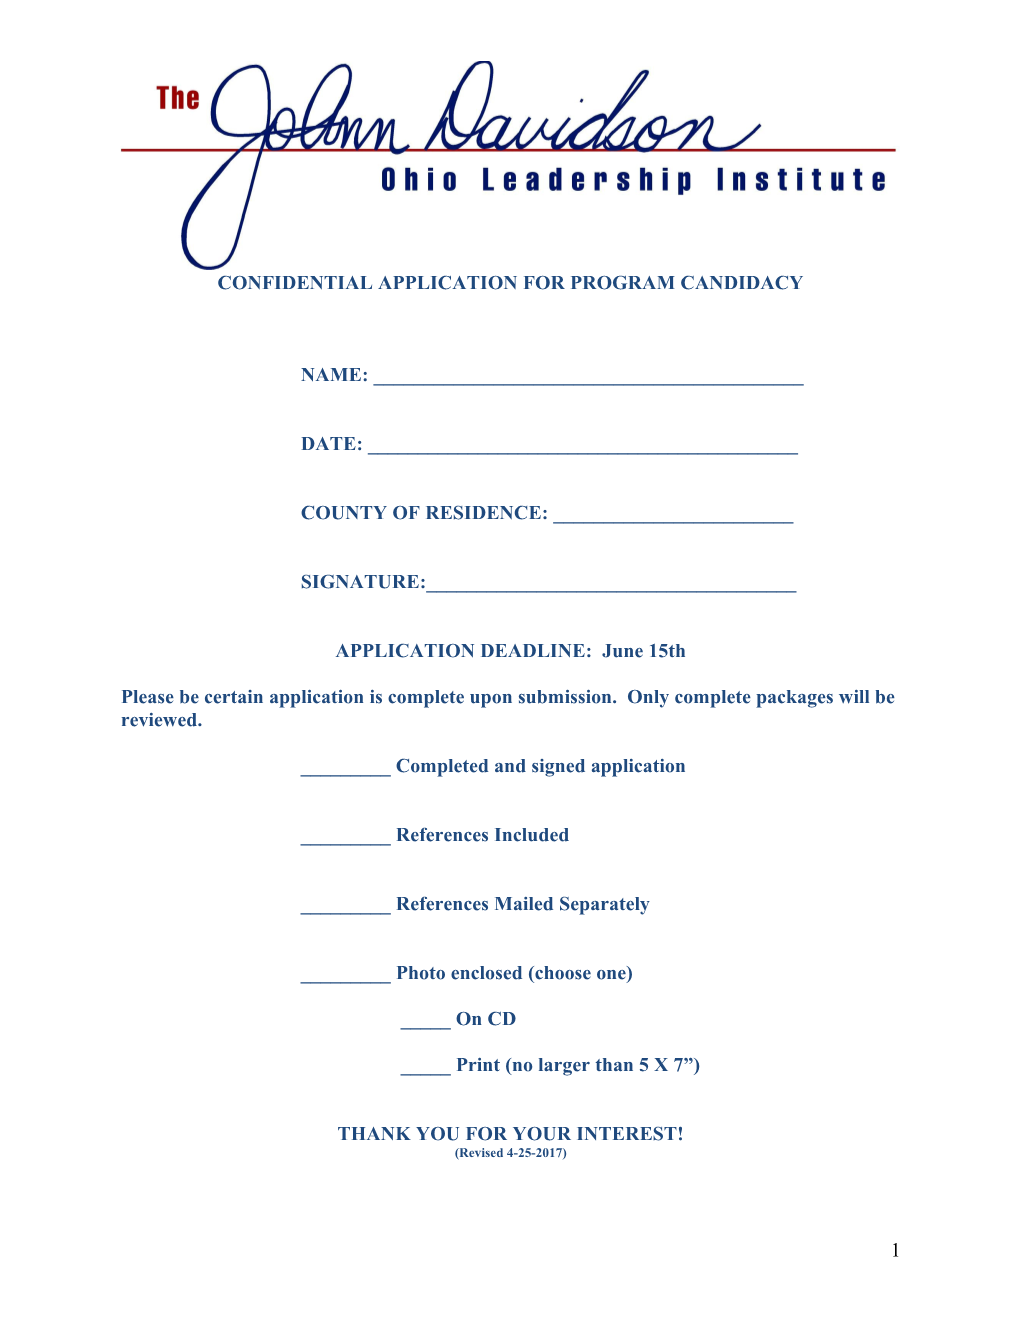 The Jo Ann Davidson Ohio Leadership Institute